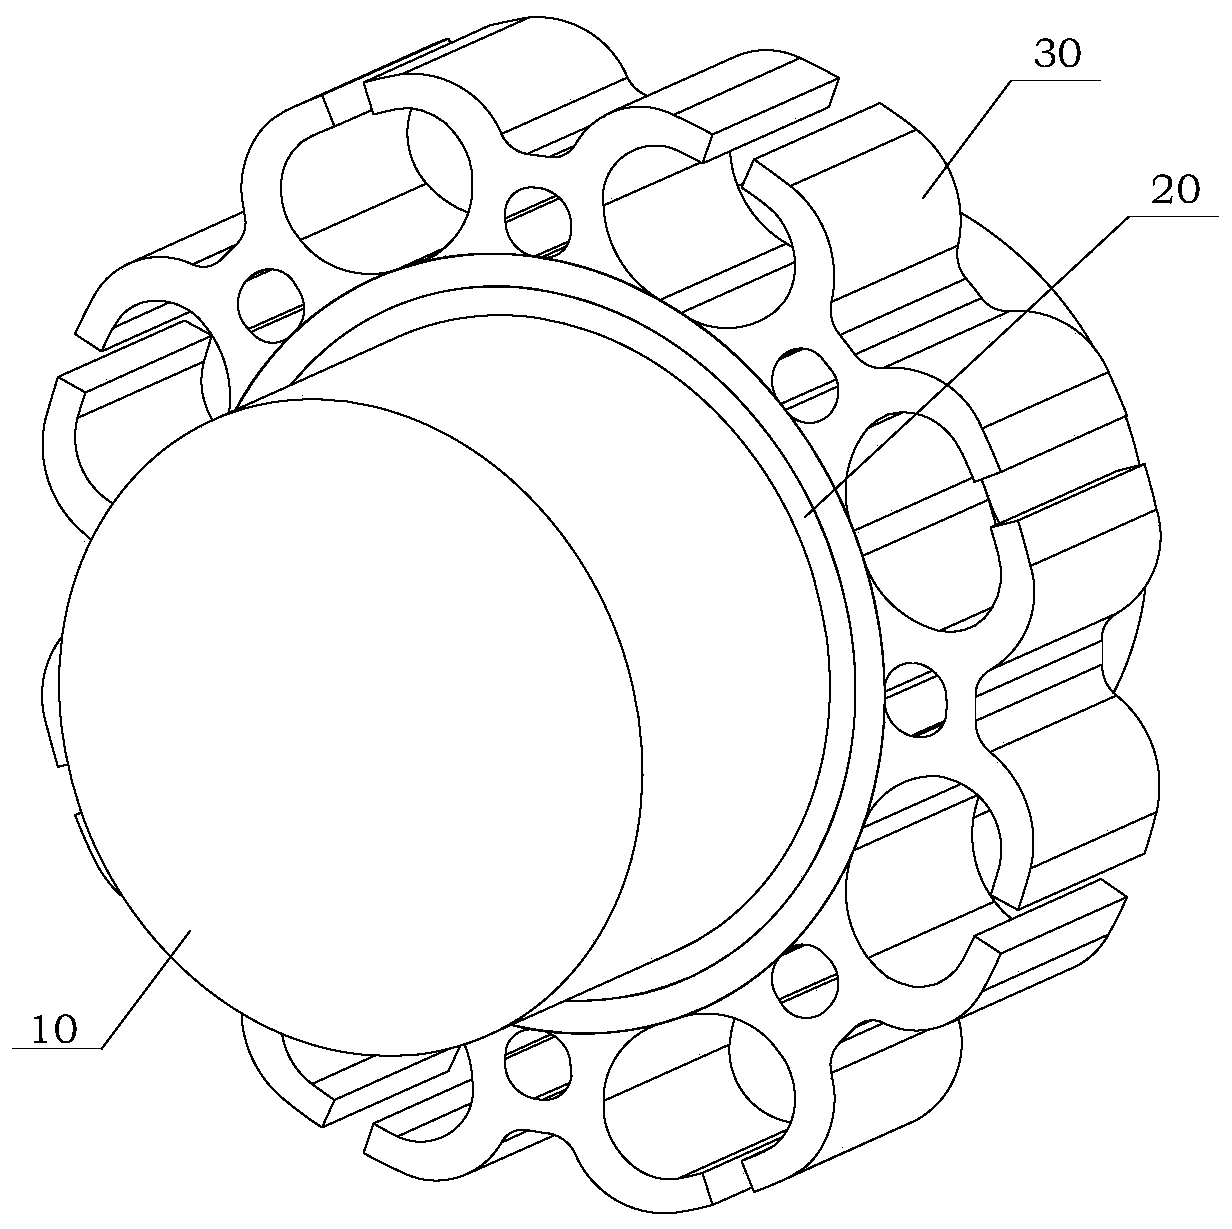 Segmented open flexible segment radial protection bearing for magnetic bearing